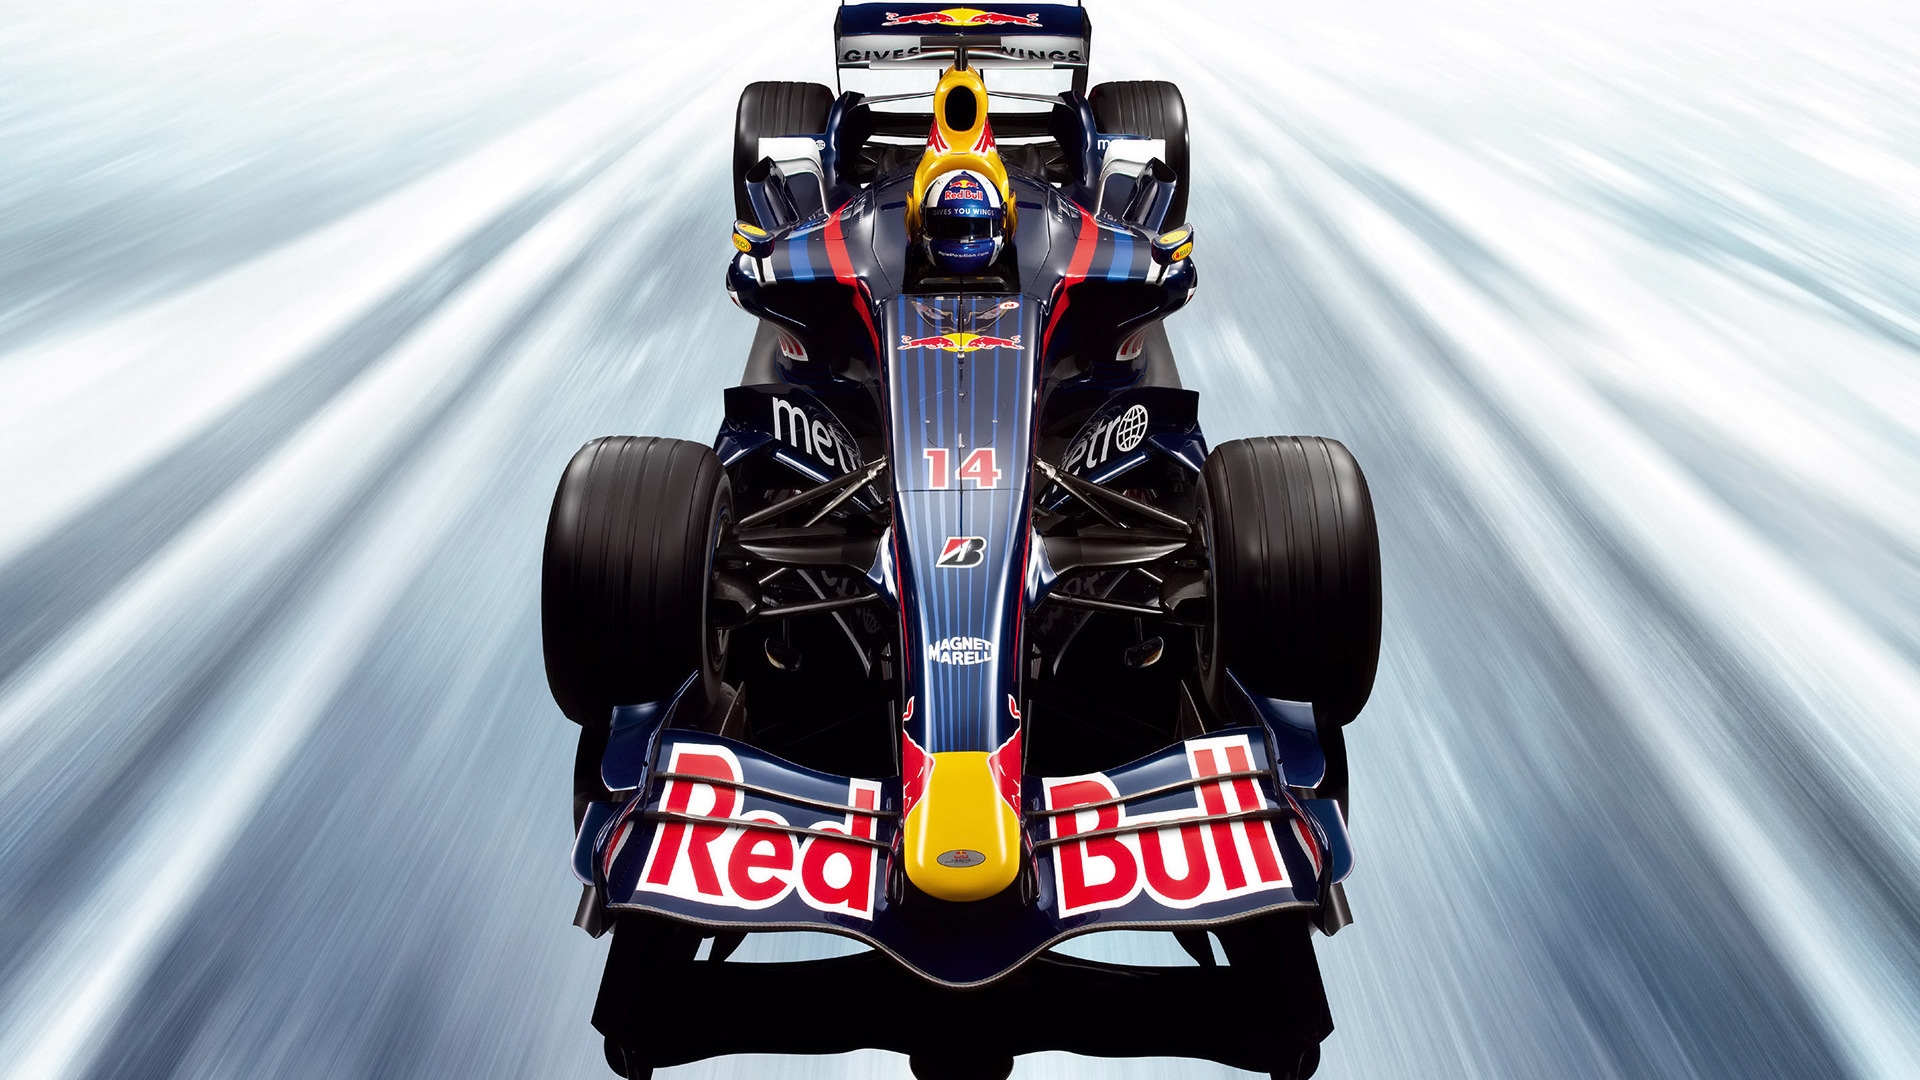 Red Bull RB3 F1 Studio Front for 1920 x 1080 HDTV 1080p resolution